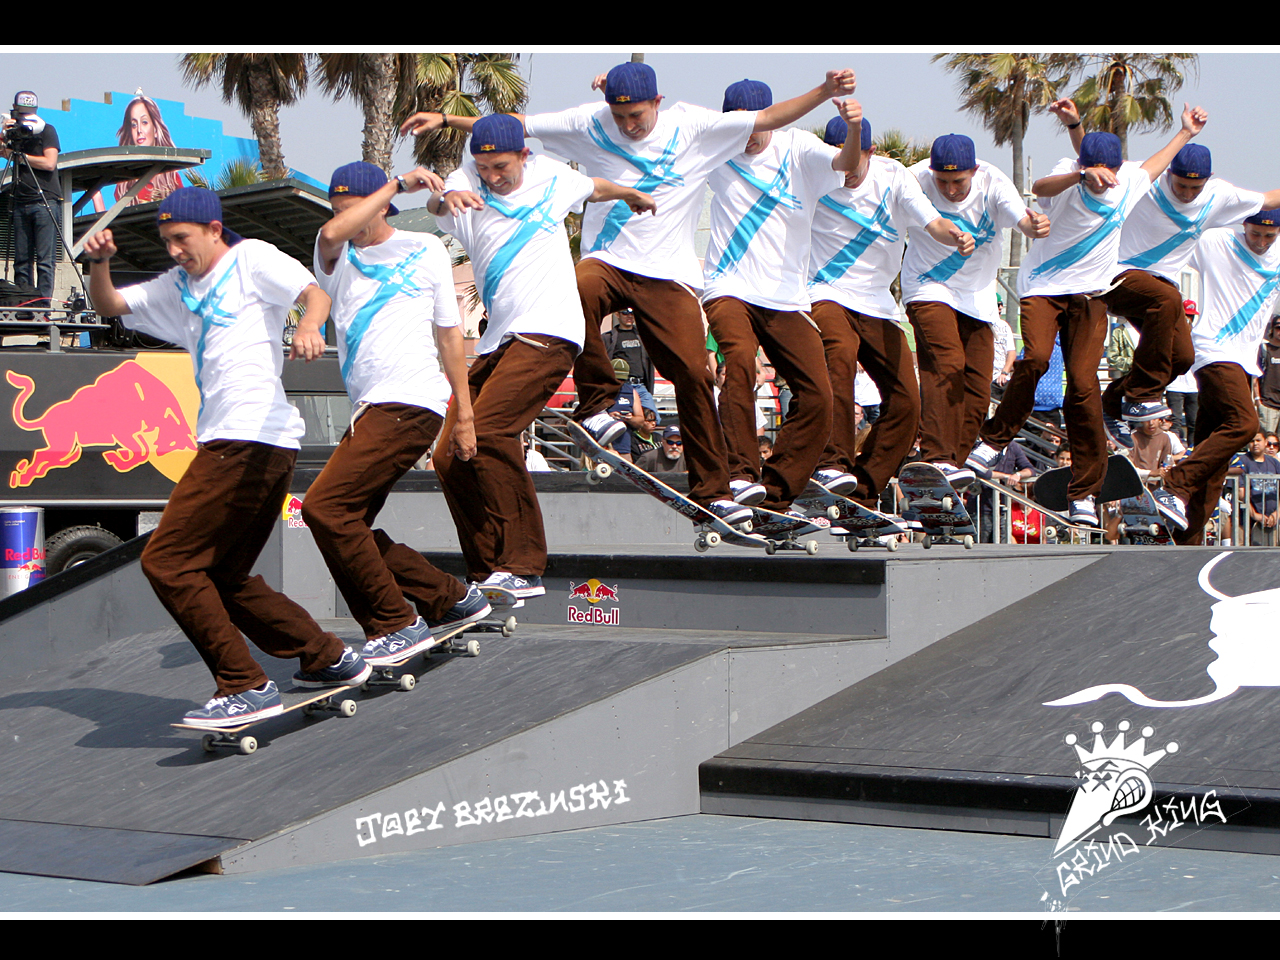 Grind King Wallpaper Skateboarding